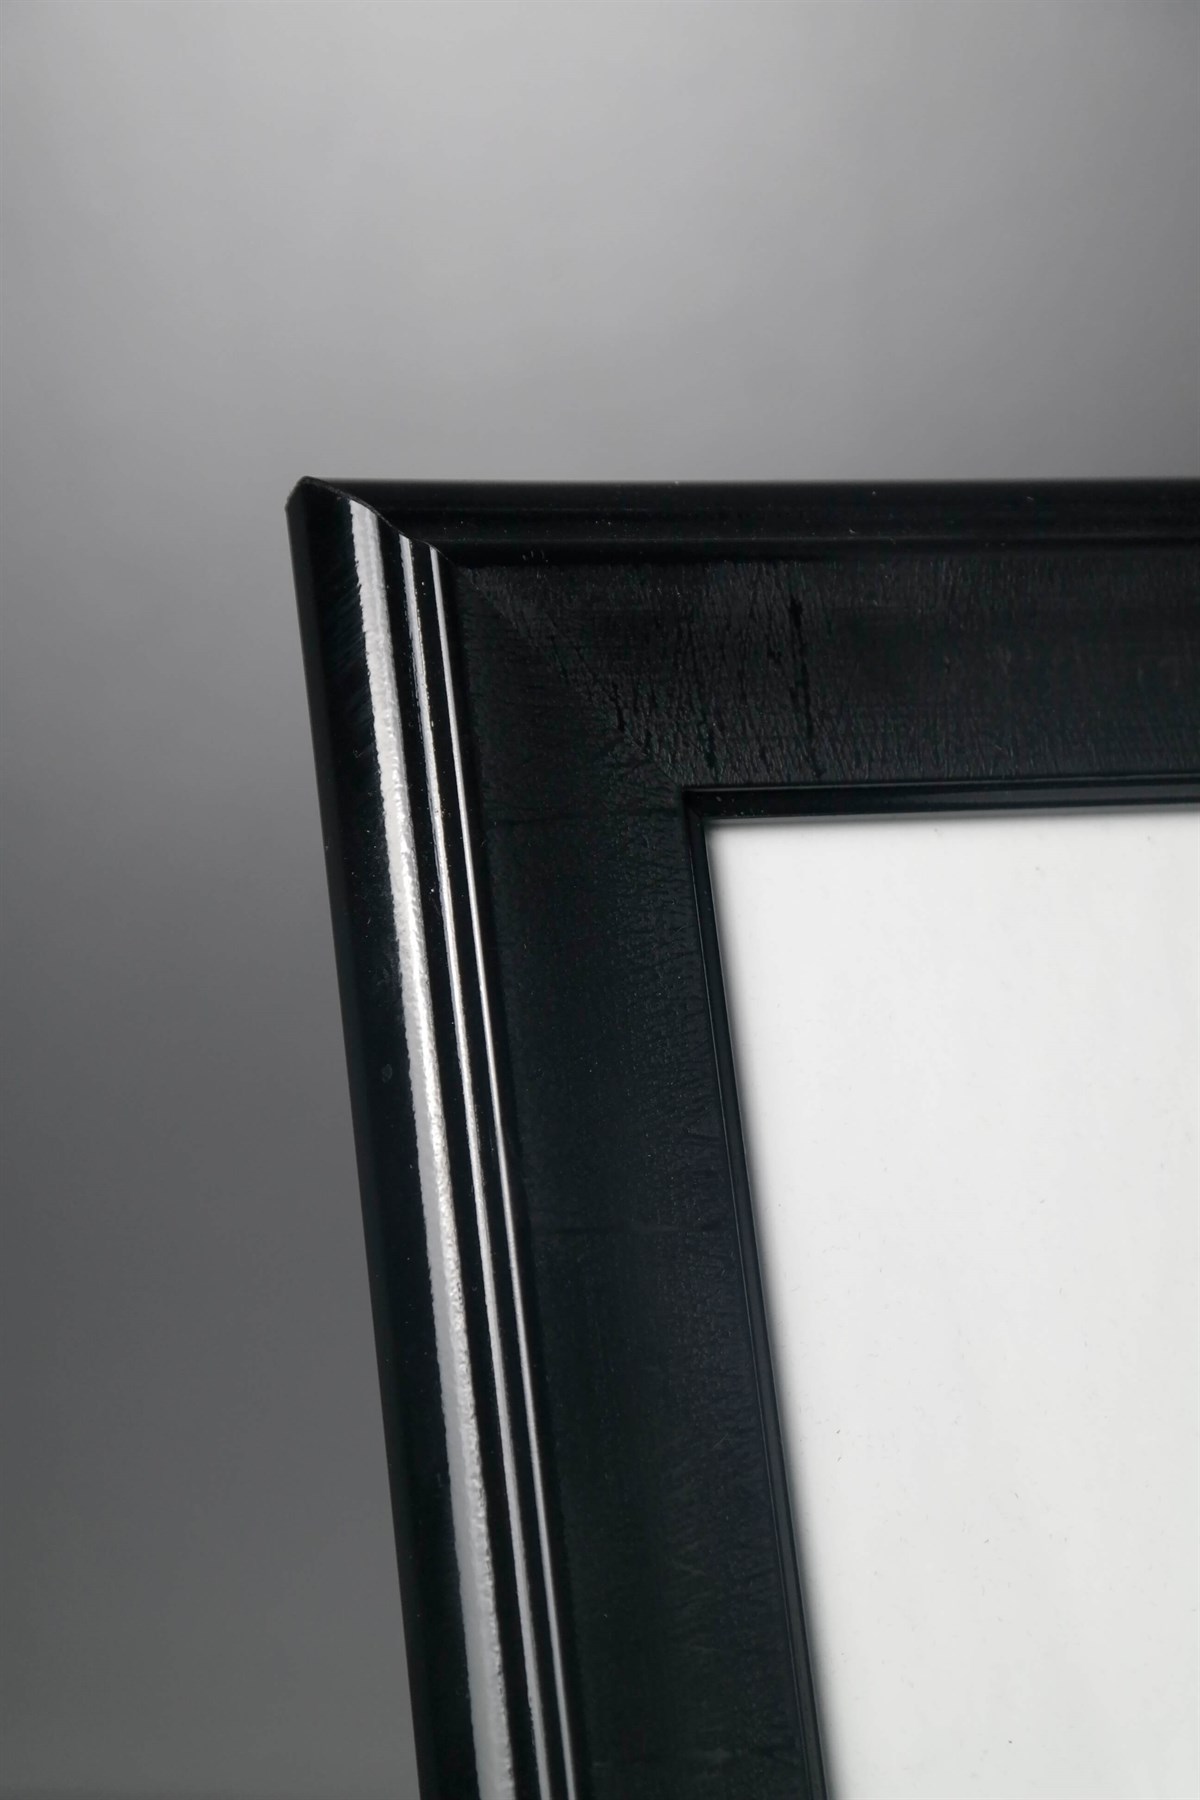 Siyah Mat Ahşap Resim Çerçevesi 20x25 Cm Fiyatları | Joy Home Accessories